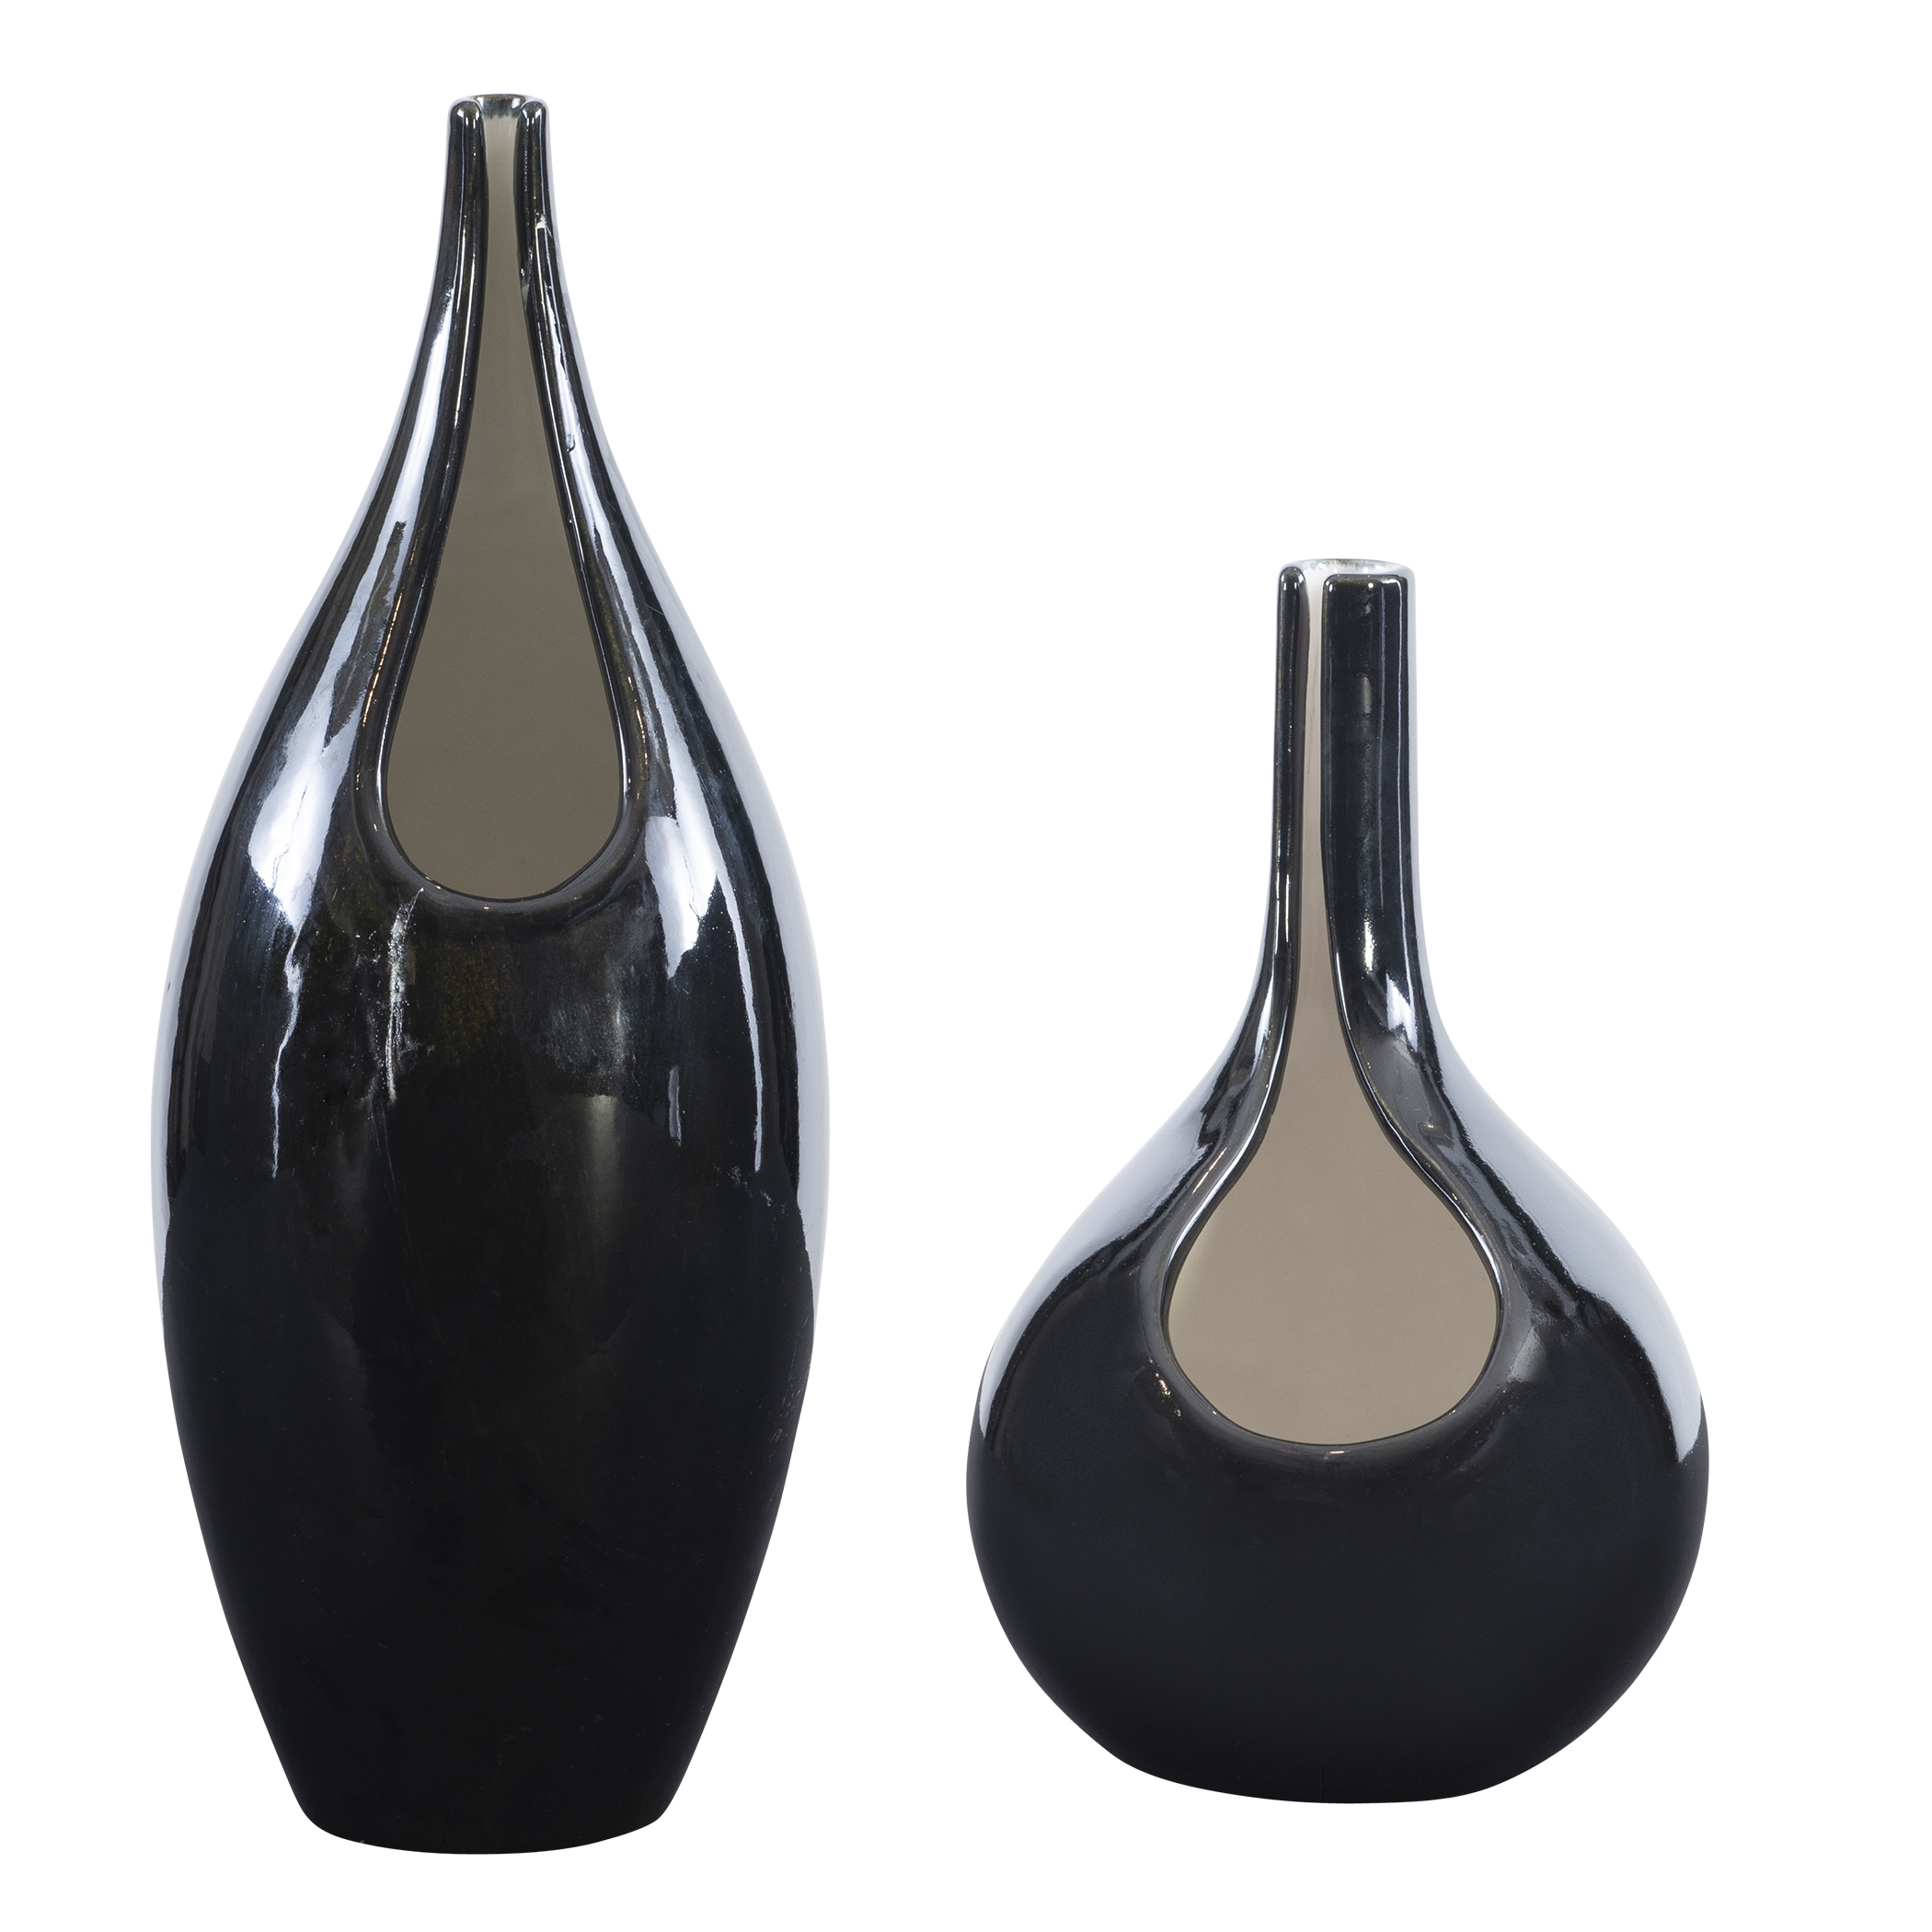 Lockwood Modern Vases, S/2 - Image 1